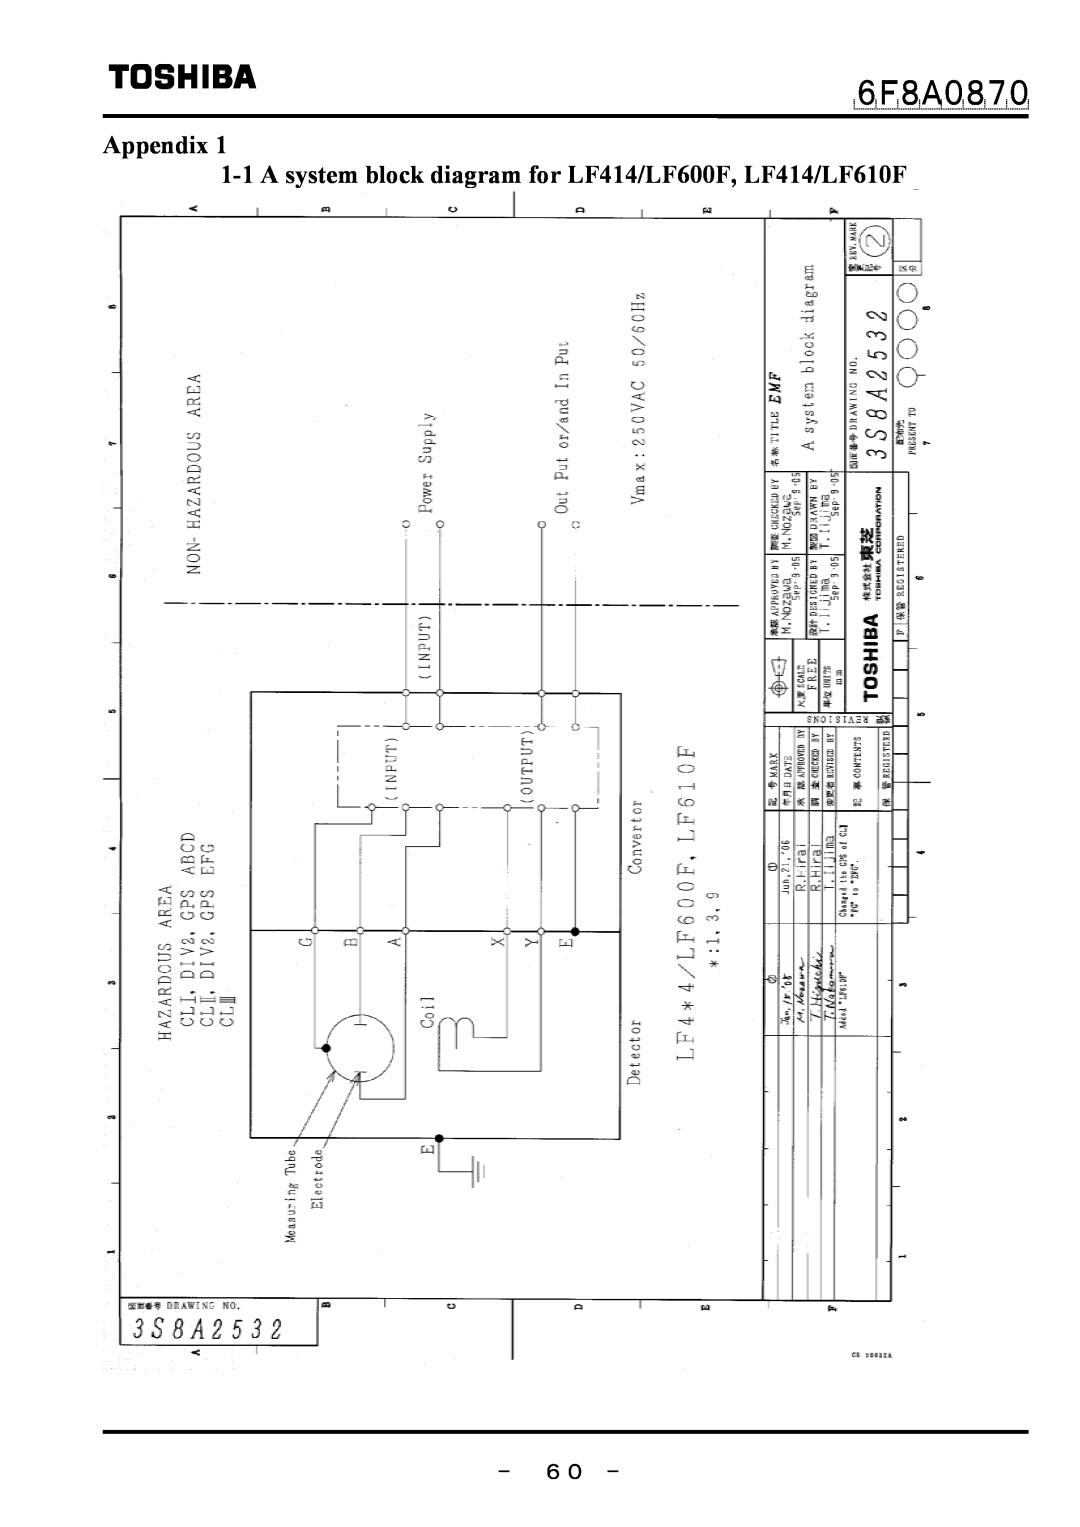 Toshiba manual Appendix 1-1 A system block diagram for LF414/LF600F, LF414/LF610F, － ６０ －, ６Ｆ８Ａ０８７０ 